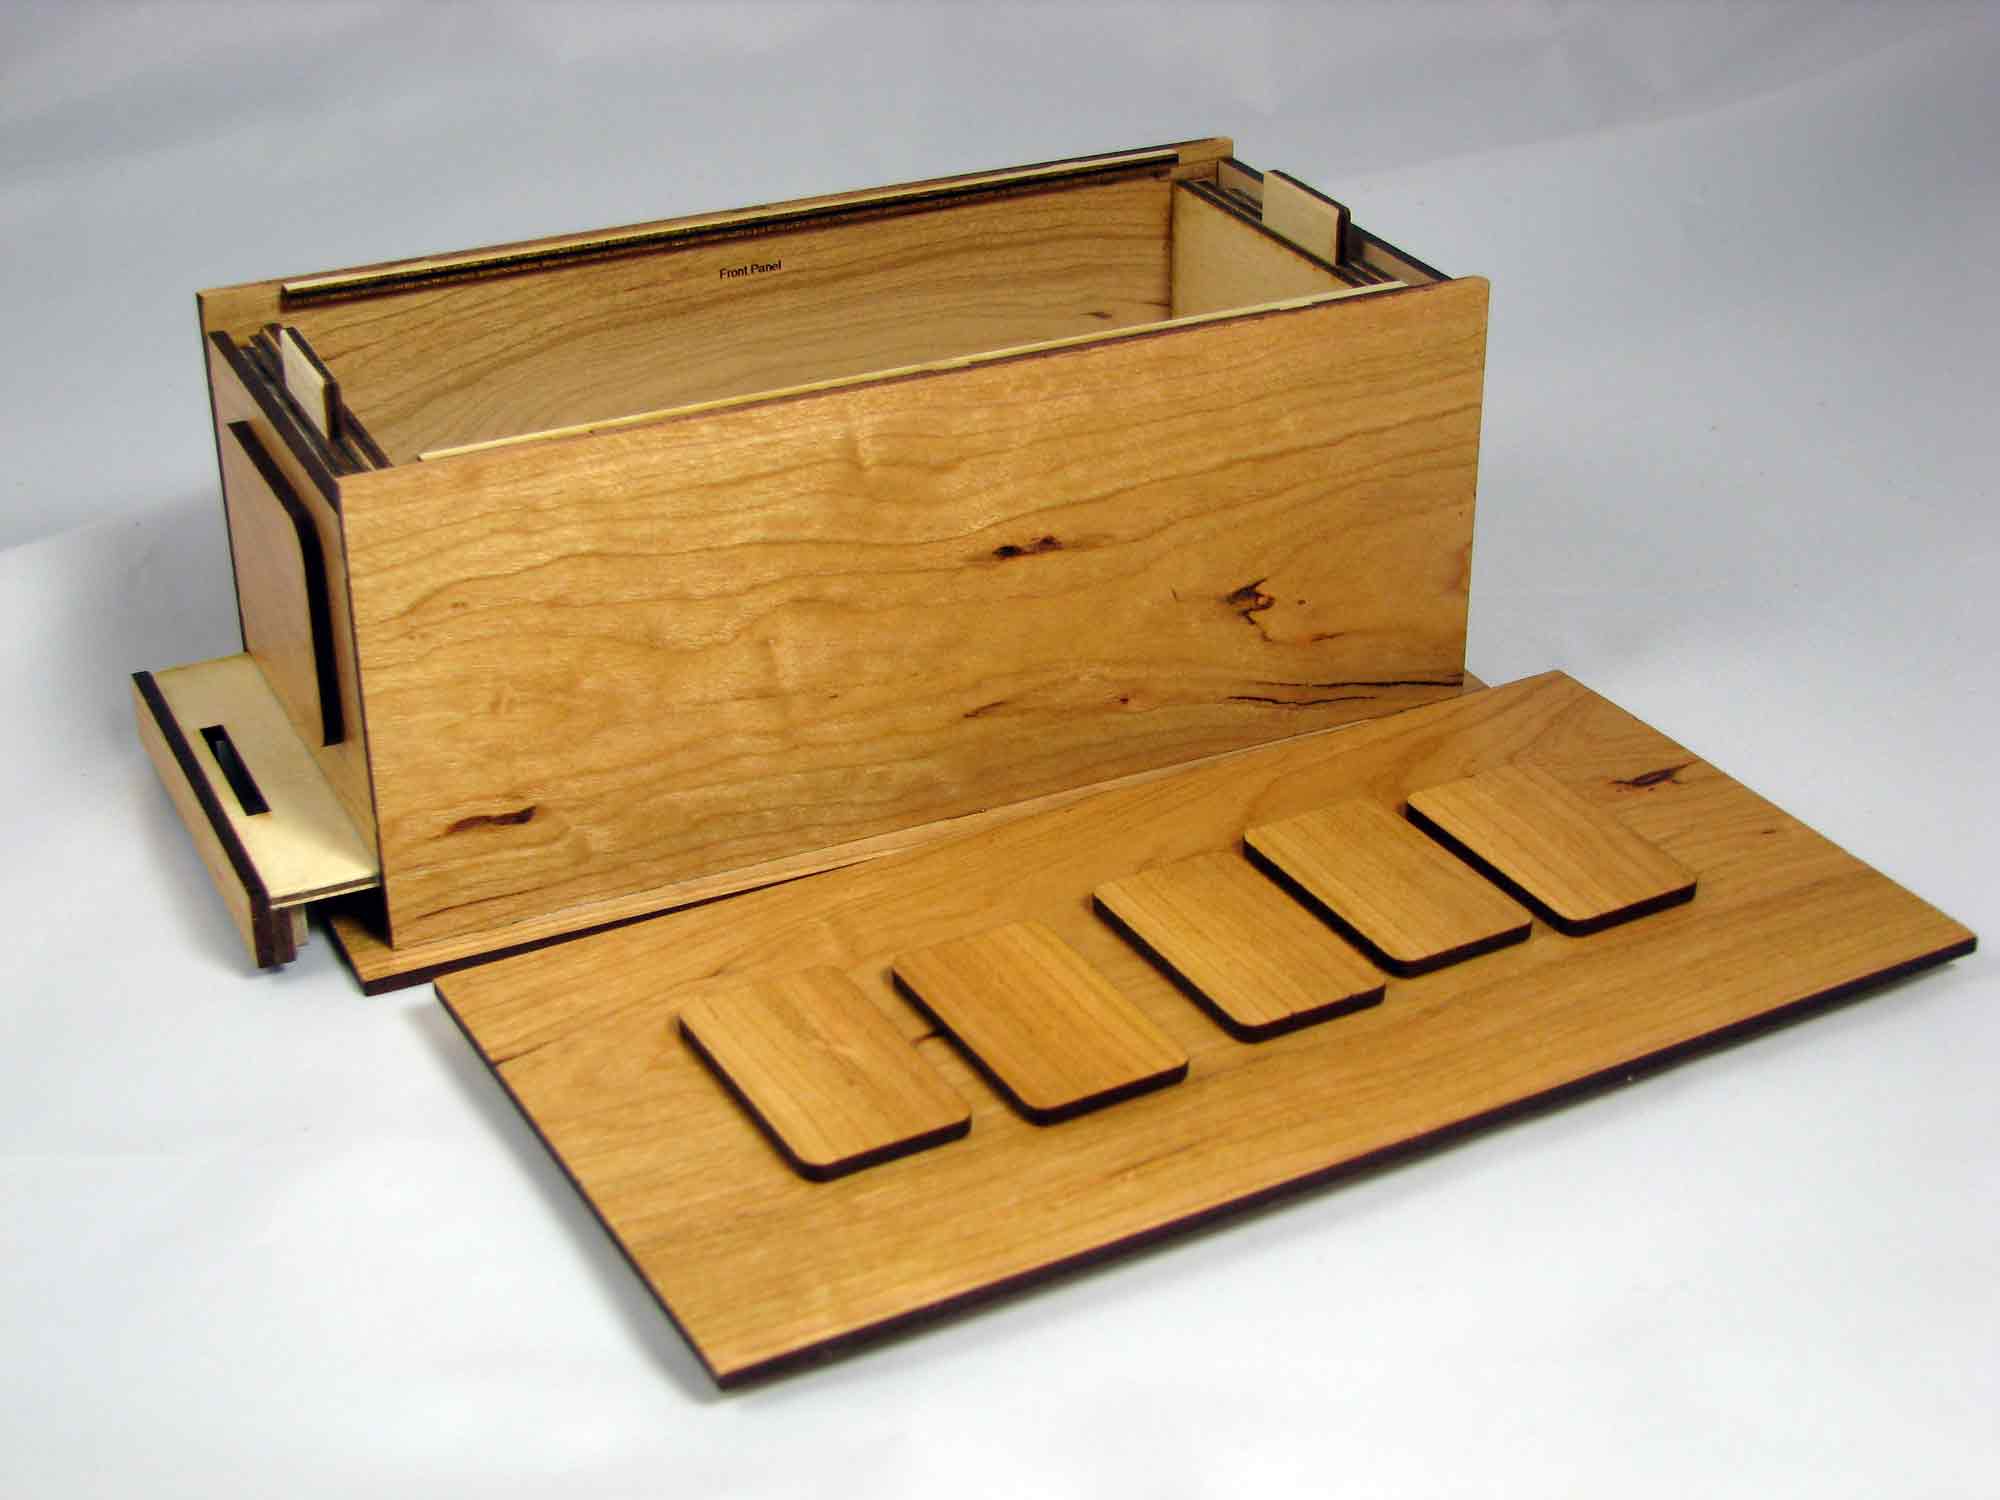  wooden box plans free